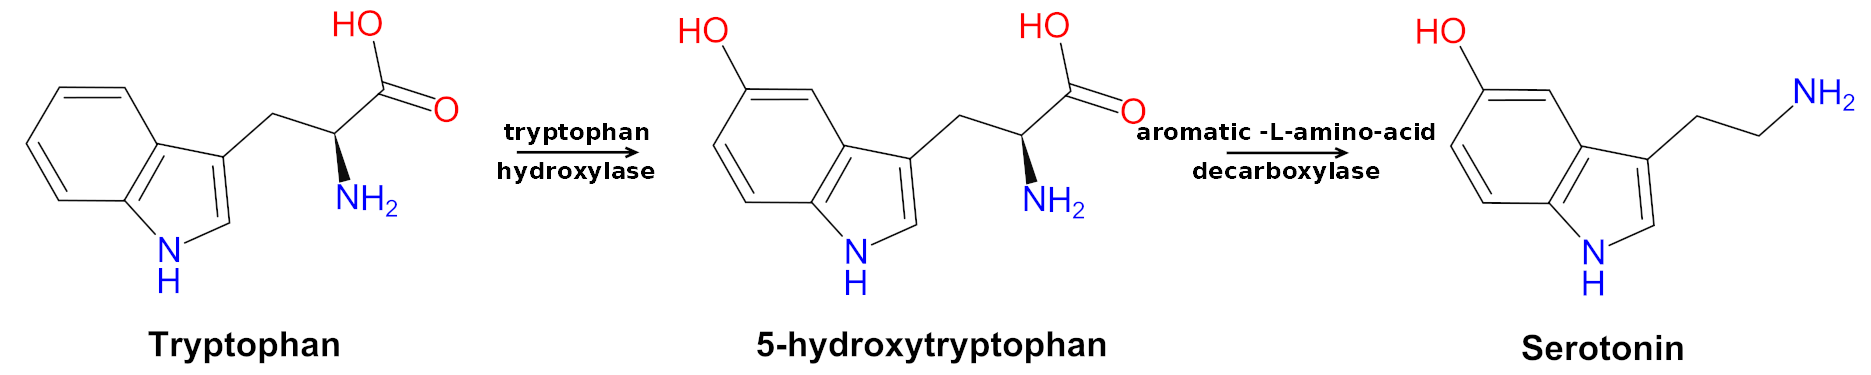 Tryptophan 5-HTP Serotonin Pathway